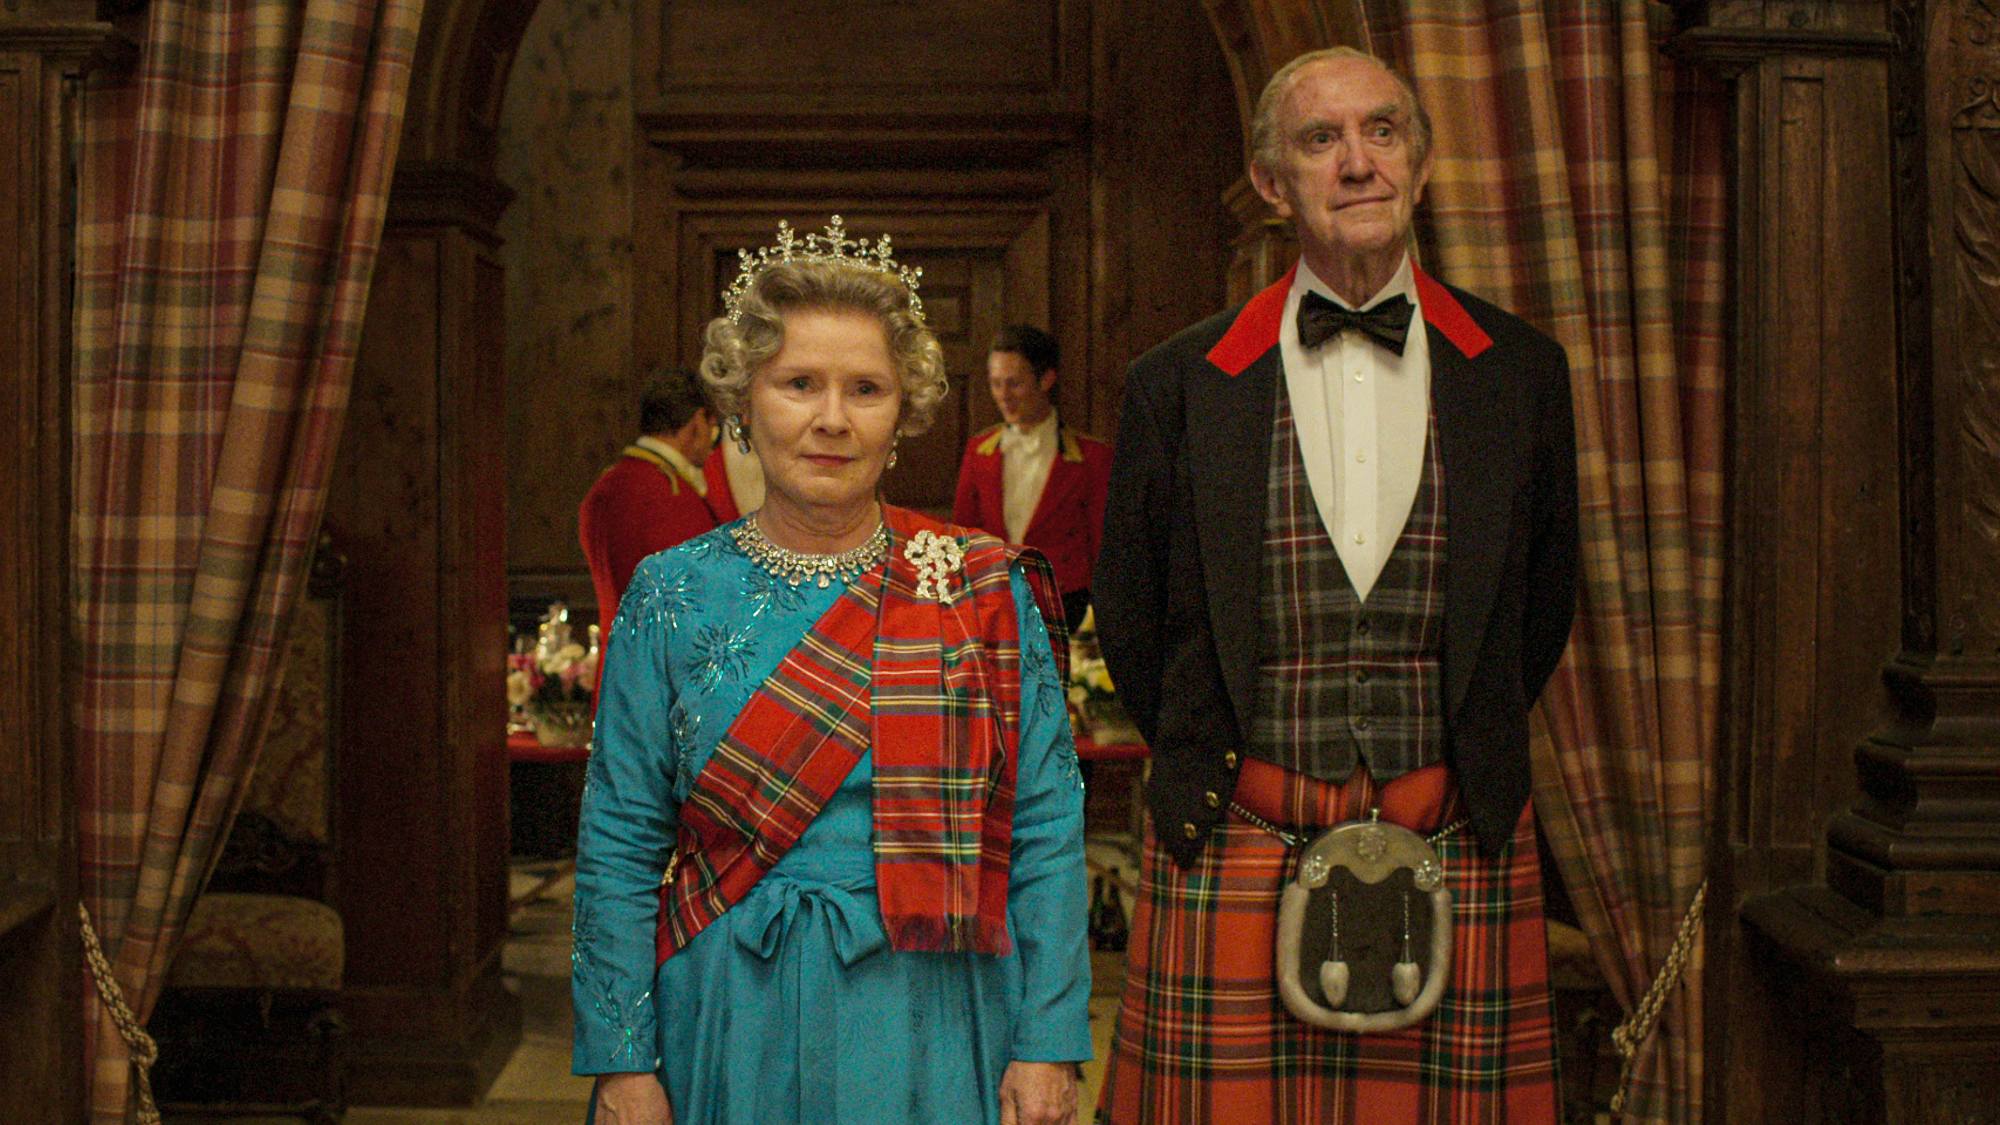 Imelda Staunton as Queen Elizabeth II and Jonathan Pryce as Prince Philip wearing Scottish kilts and regalia in The Crown Season 5